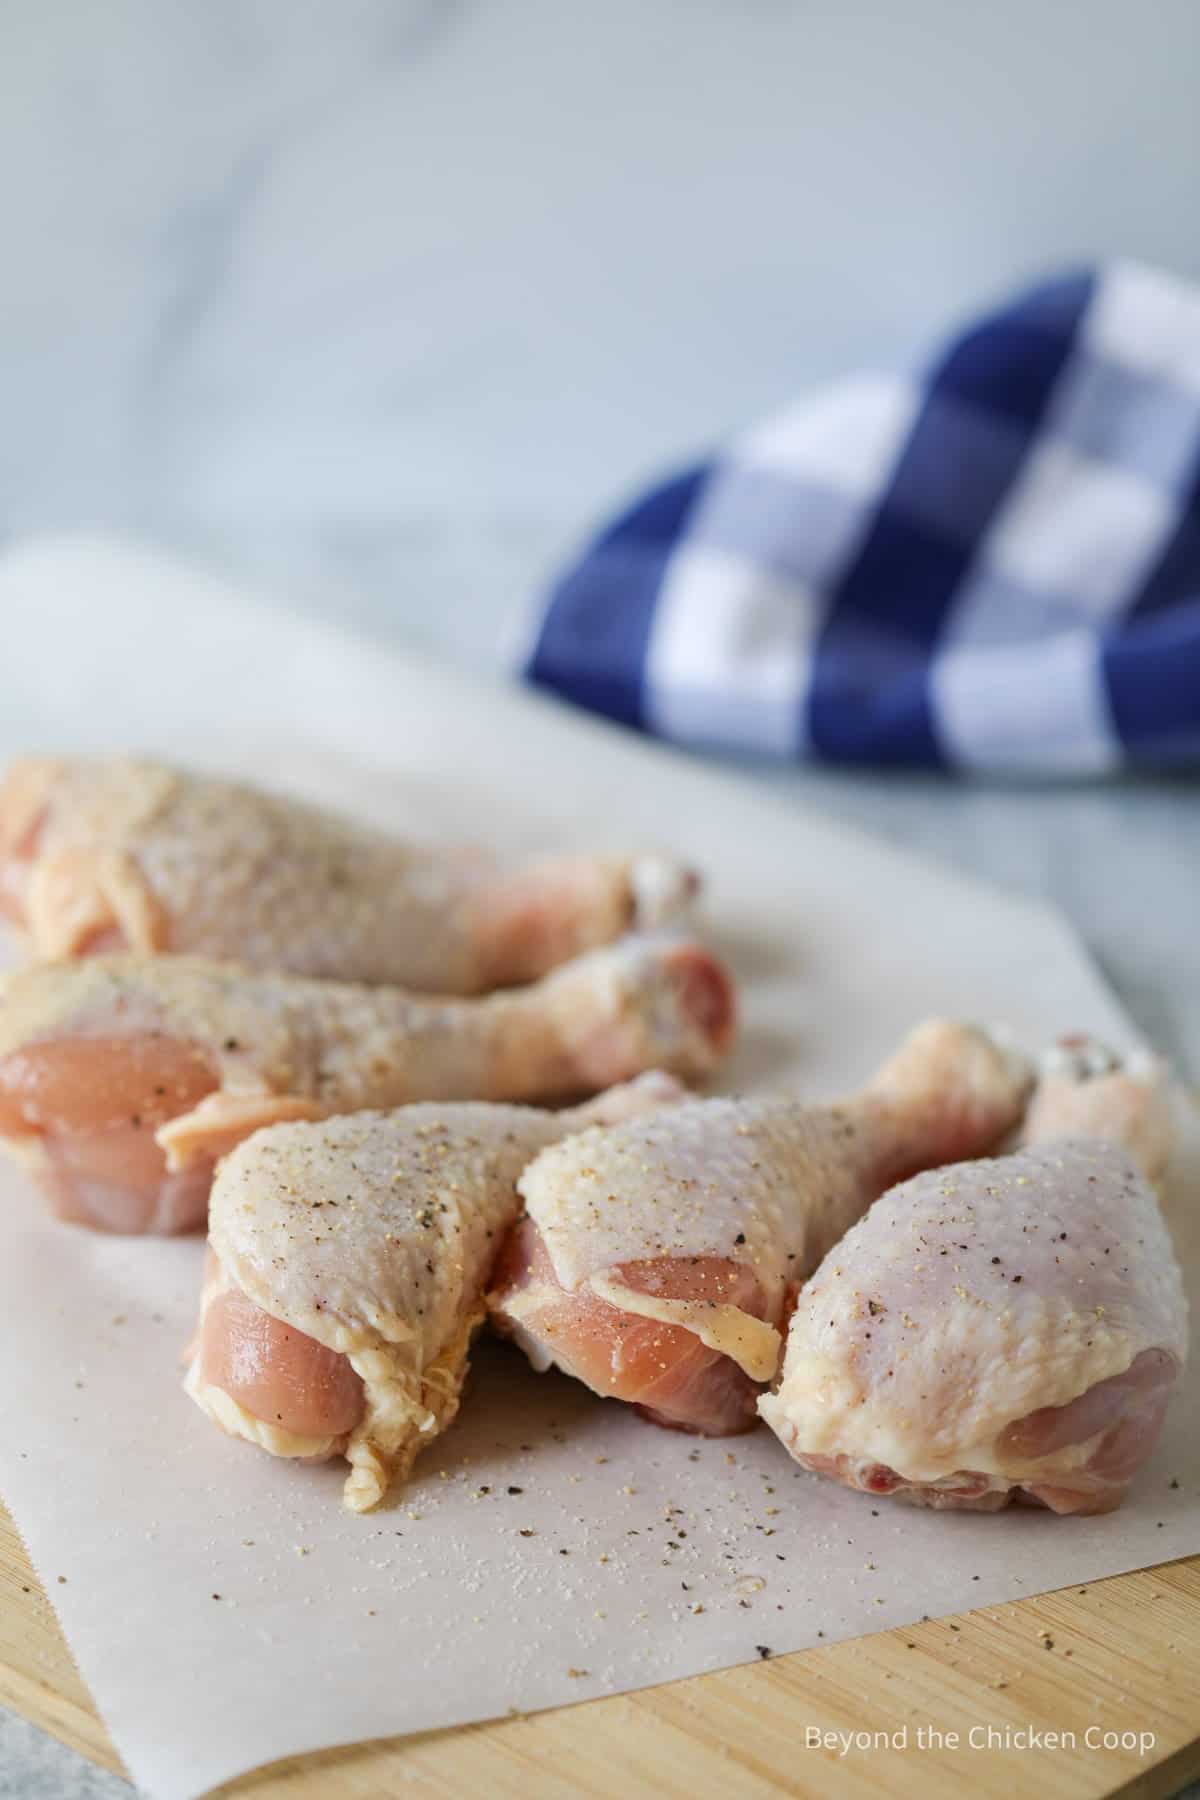 Adding seasoning to chicken legs.